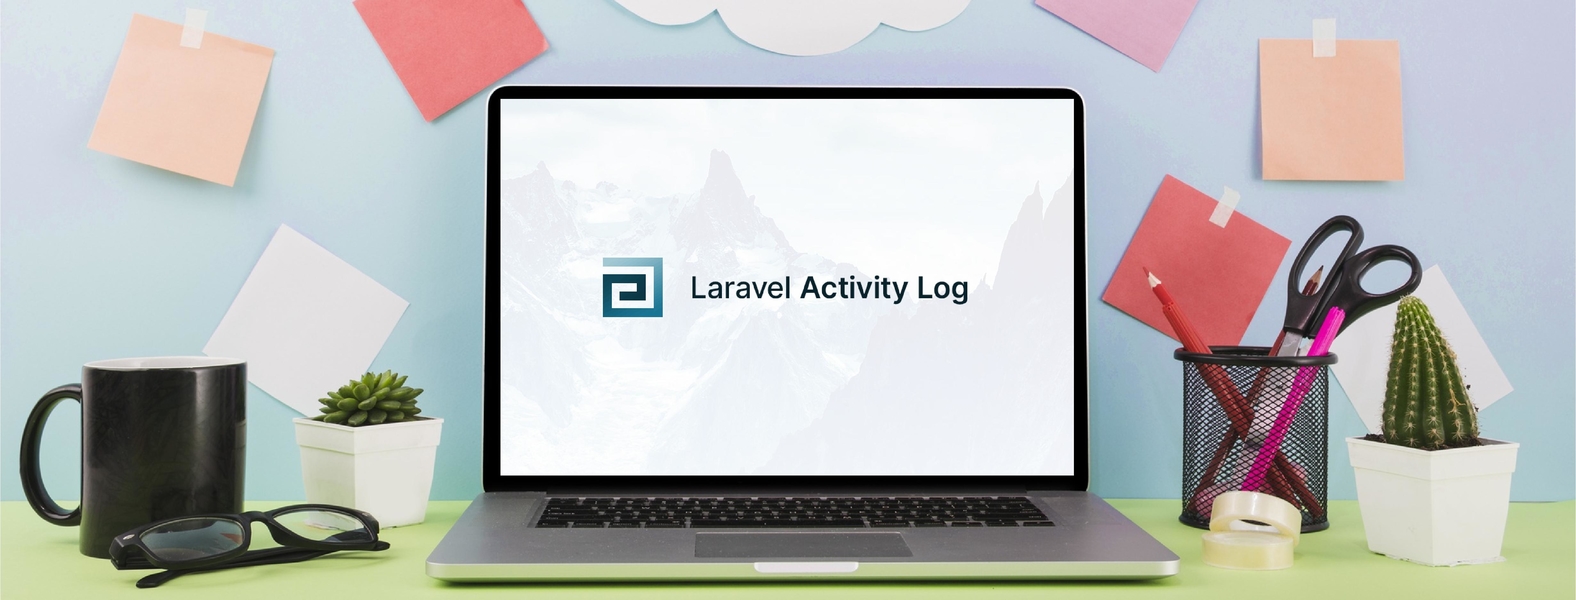 Log activity in a Laravel app with Laravel Activitylog